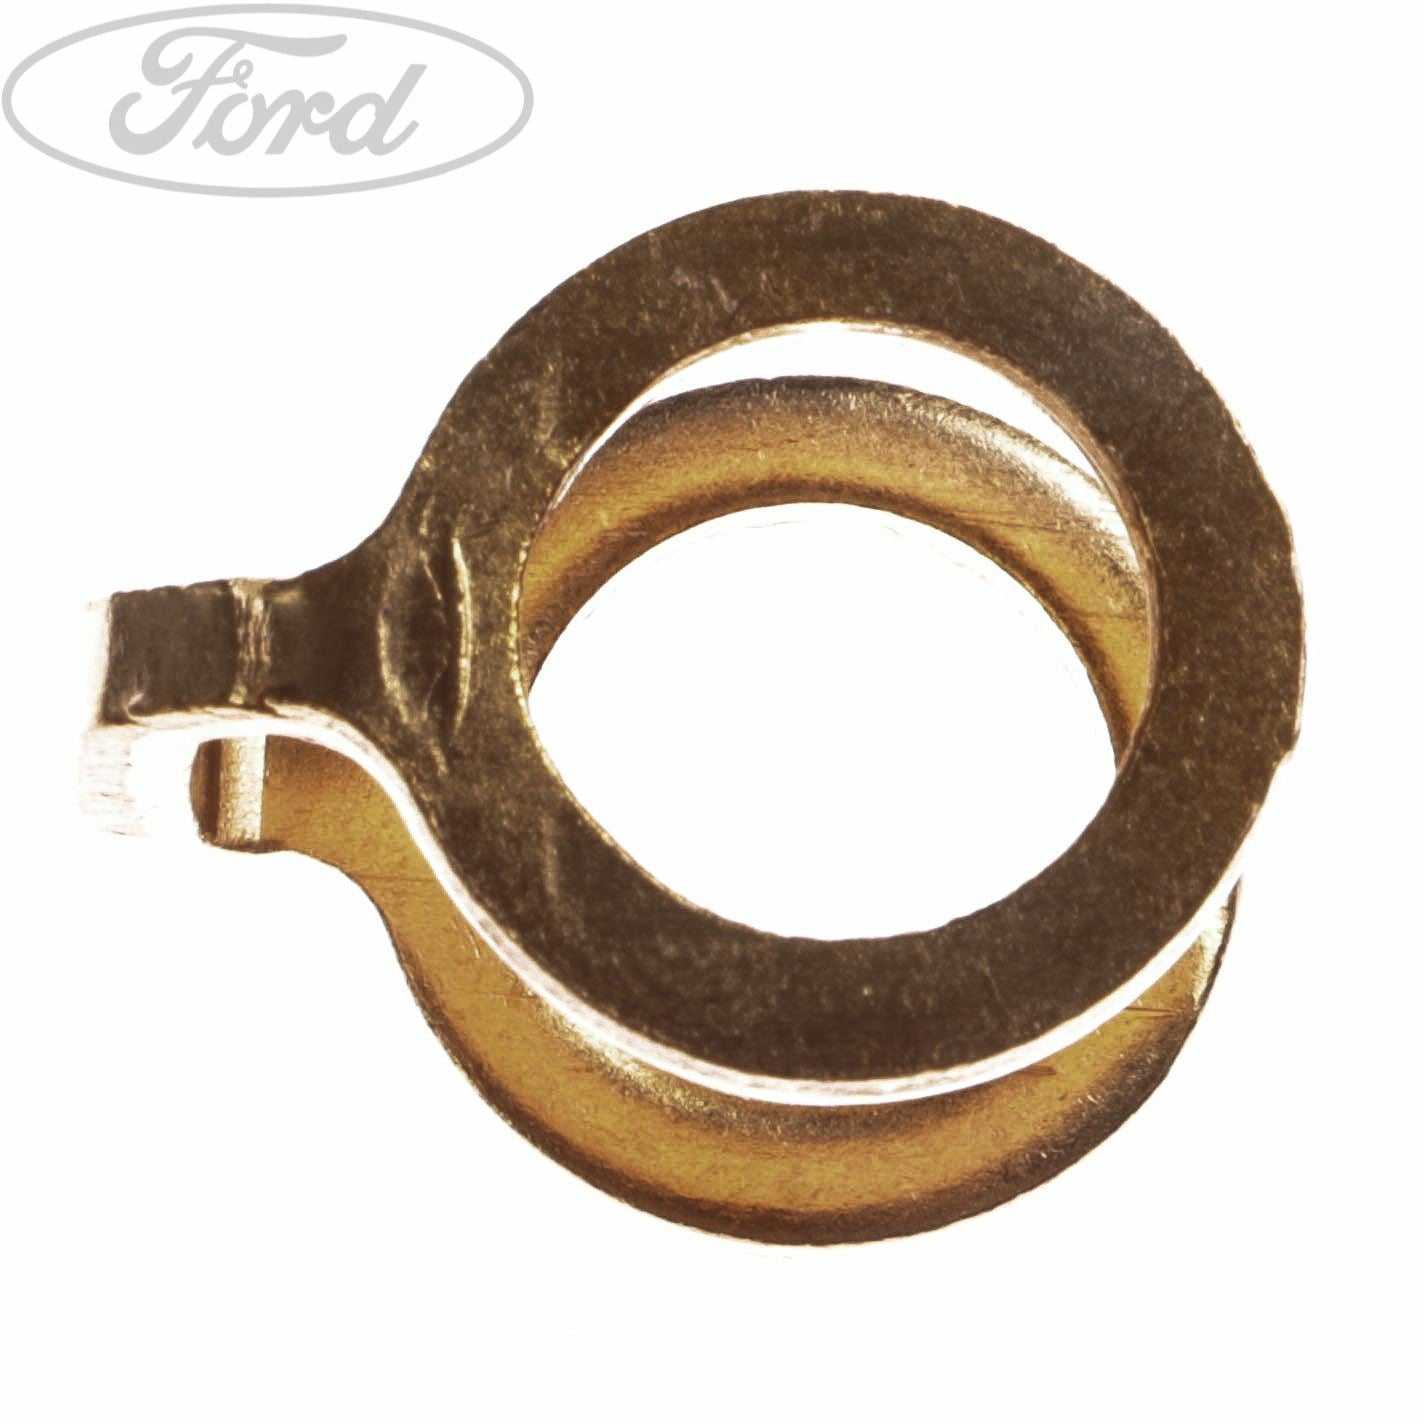 Ford, TURBOCHARGER GASKET